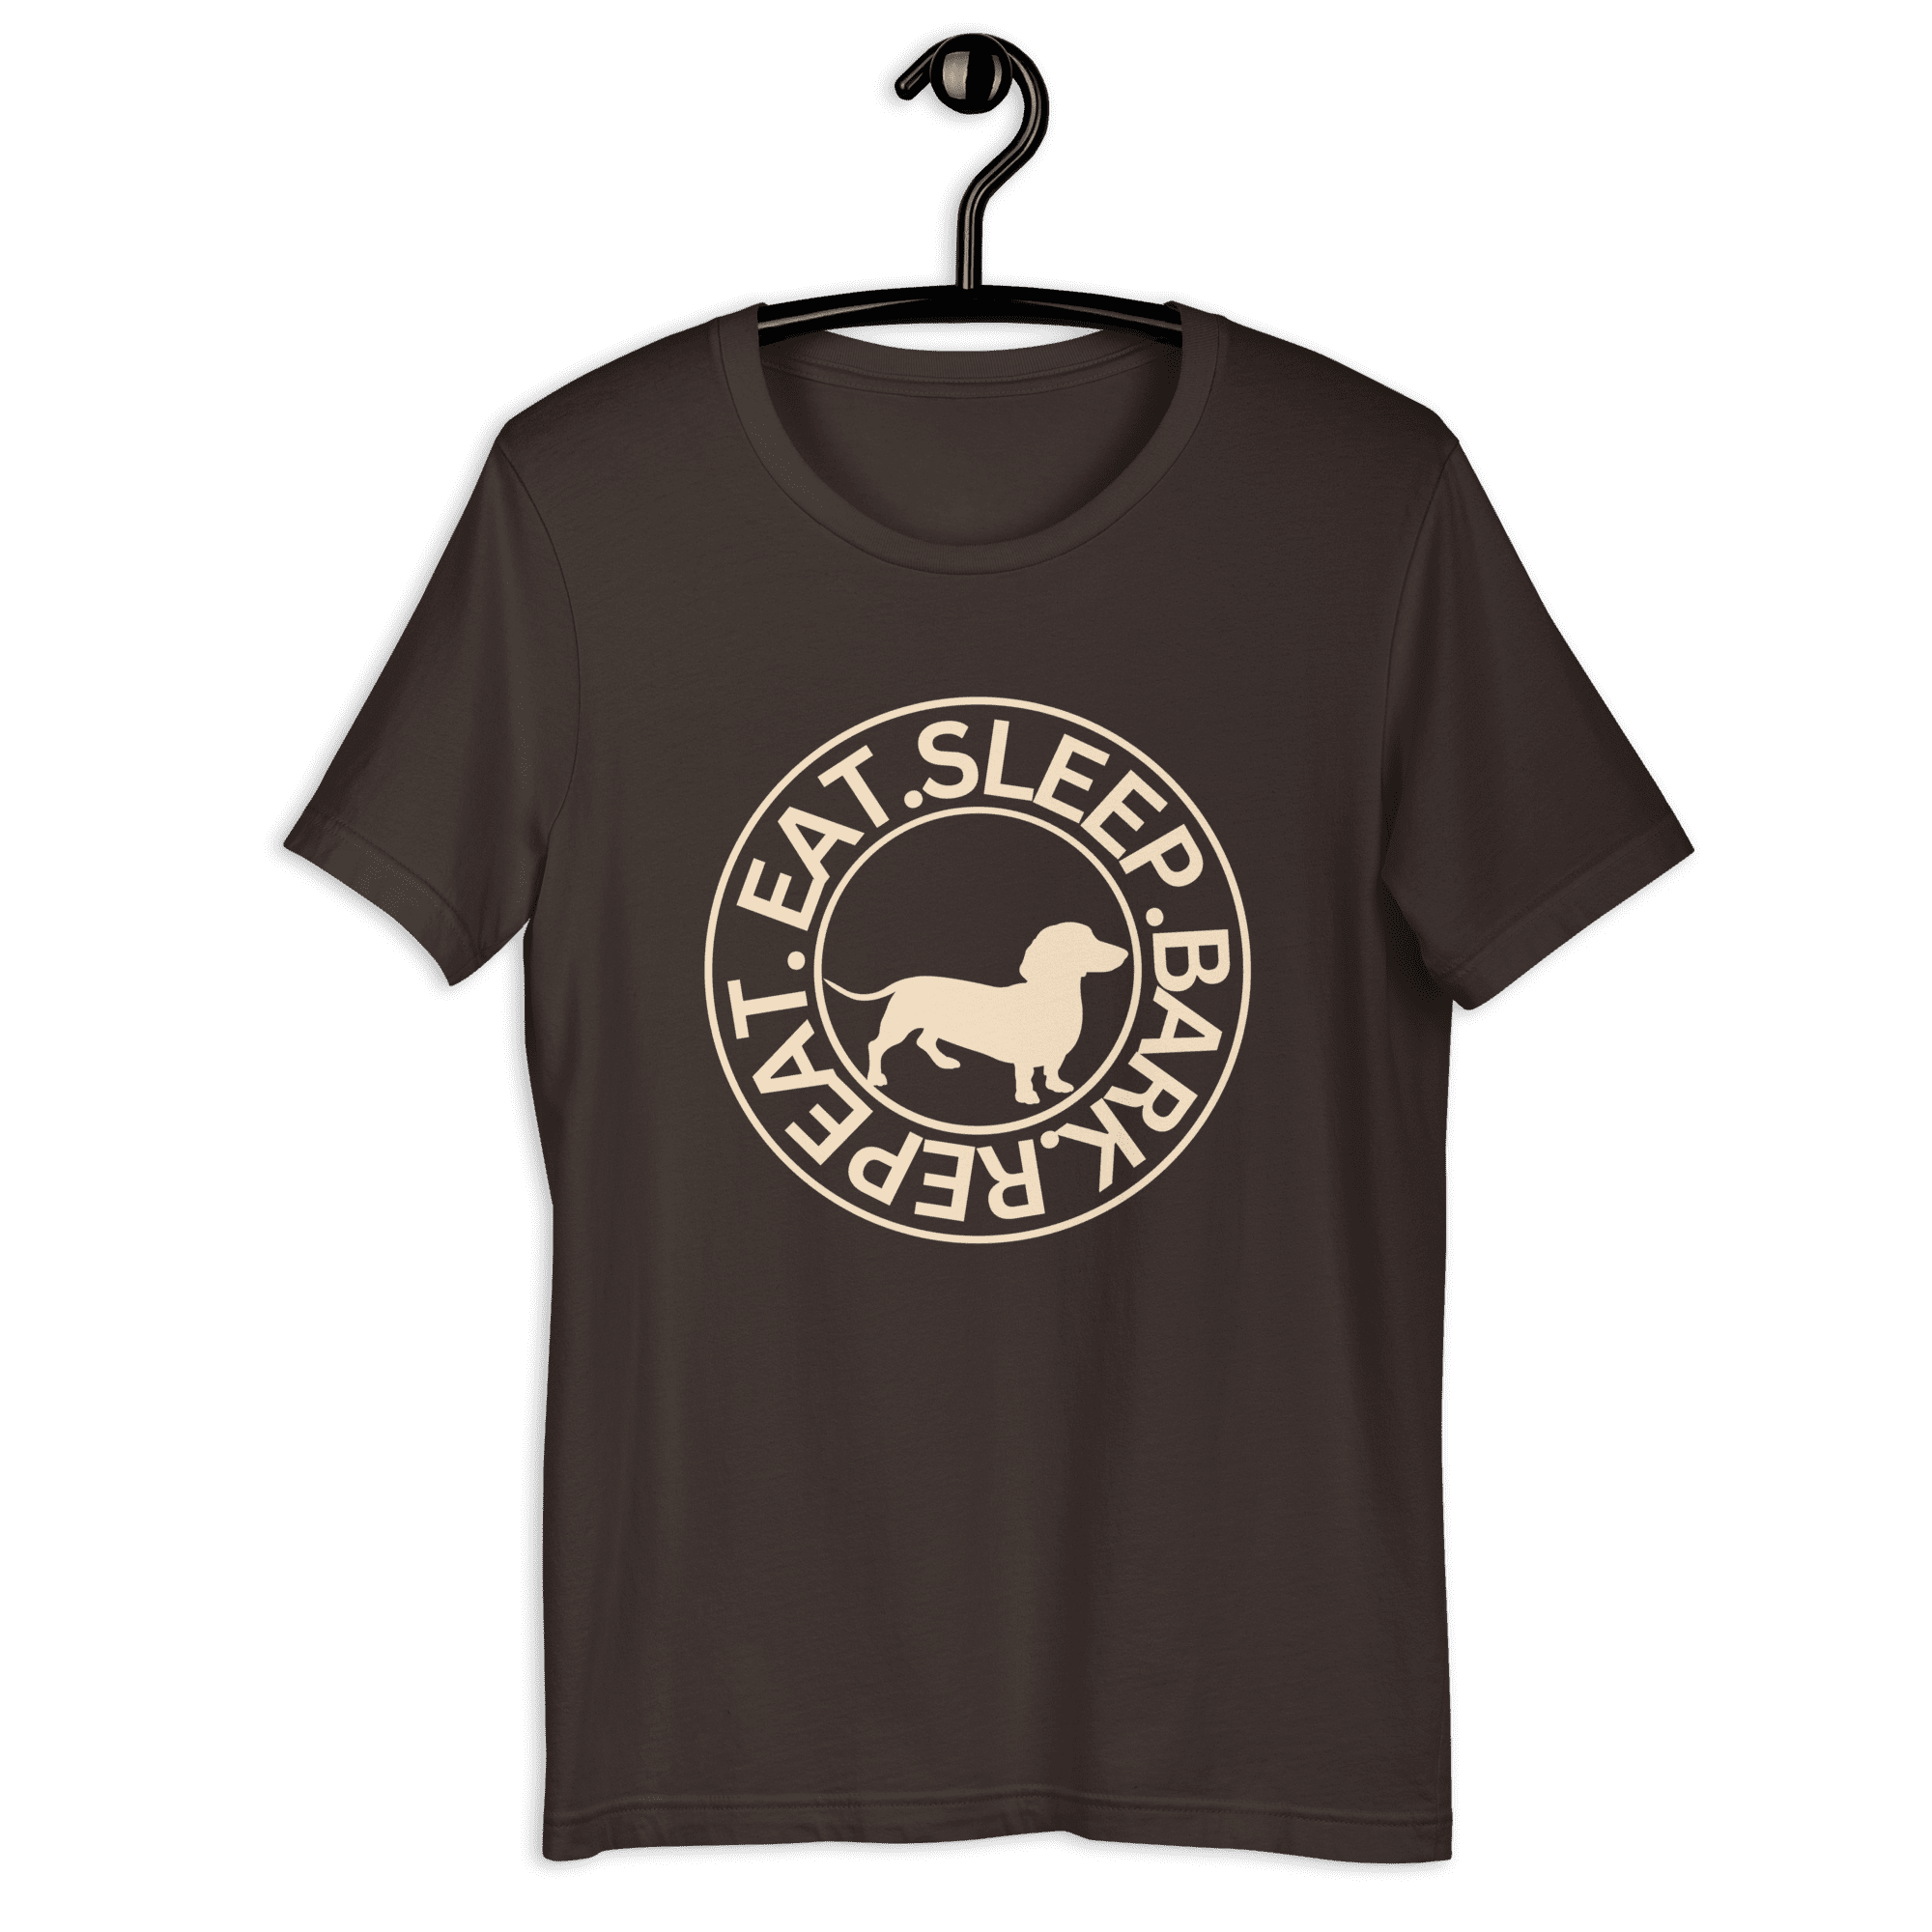 Eat Sleep Bark Repeat Transylvanian Hound (Erdélyi Kopó) Unisex T-Shirt. Browm